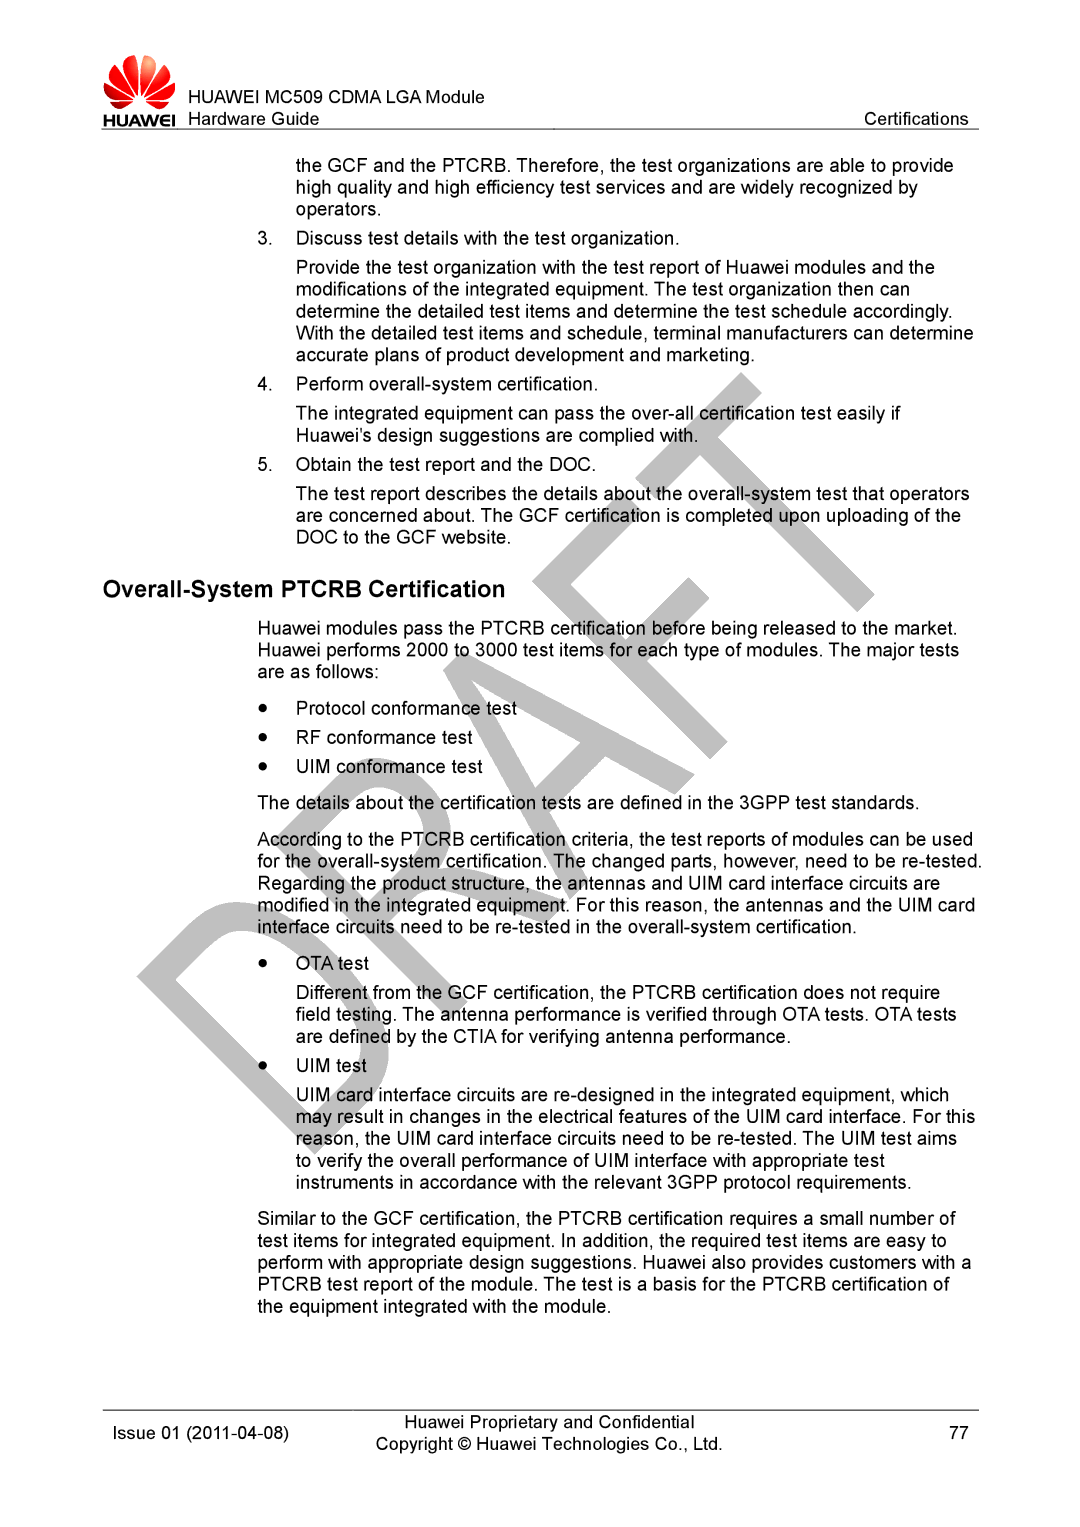 Huawei MC509 CDMA LGA manual Overall-System Ptcrb Certification 